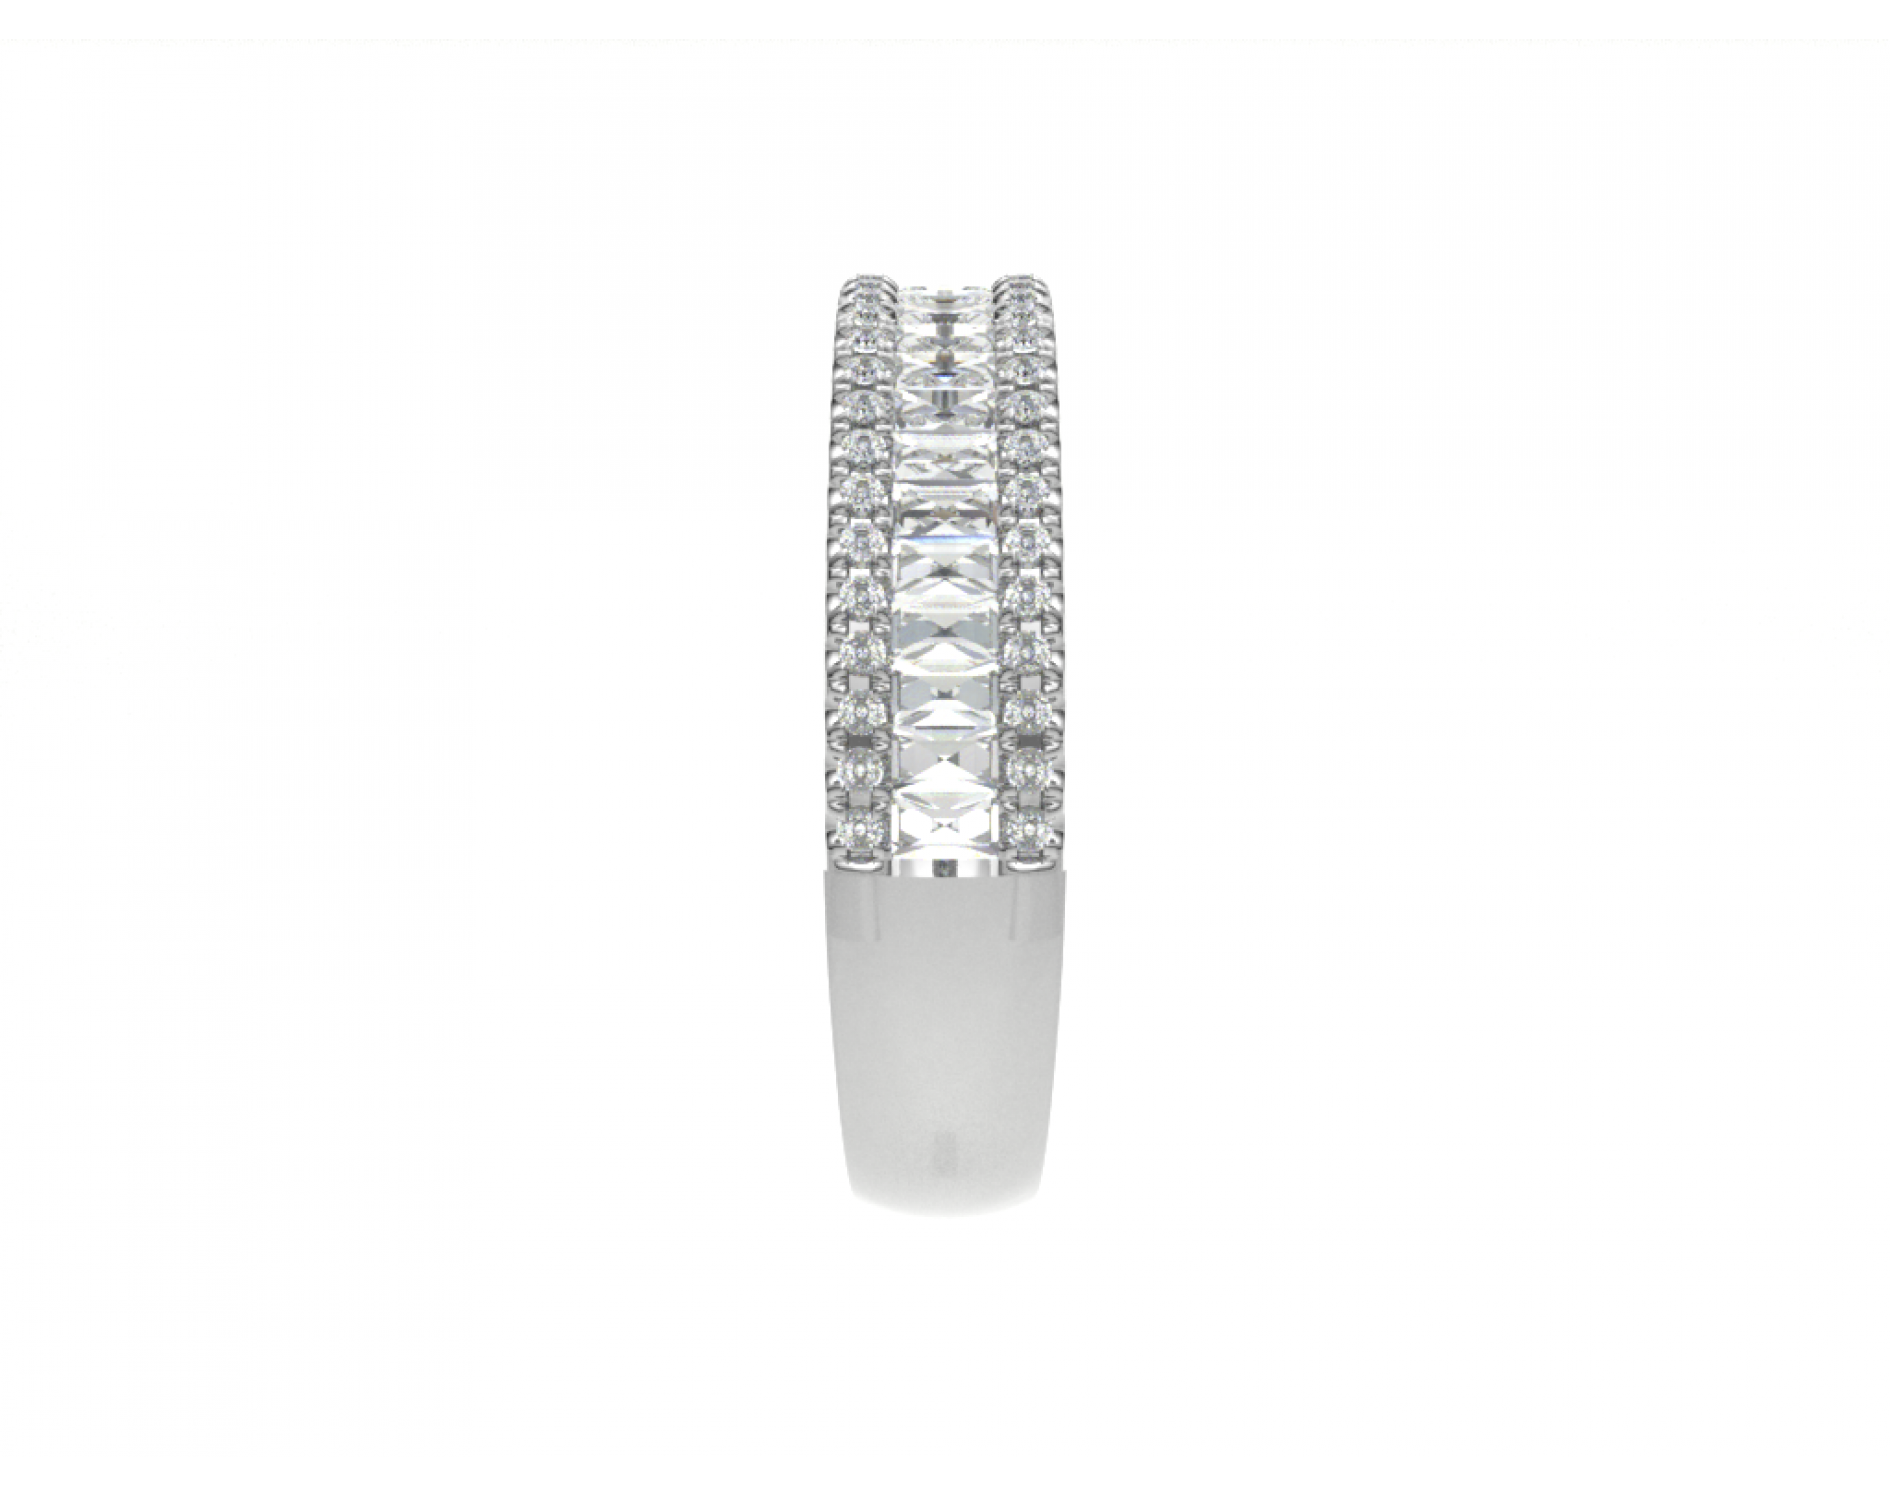 18k white gold multirow round & baguette diamond ring Photos & images